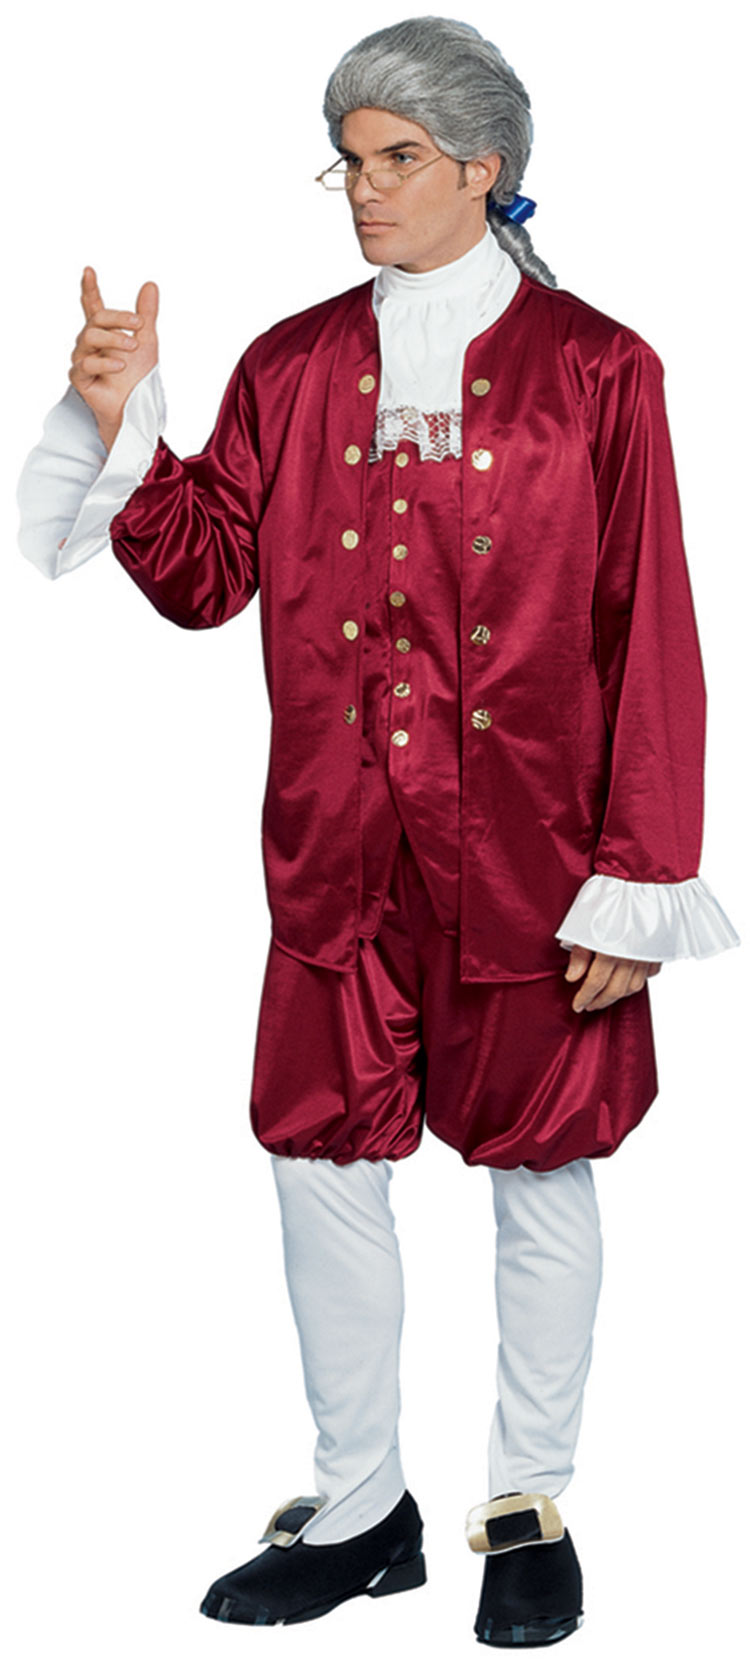 Ben Franklin Costume - Click Image to Close